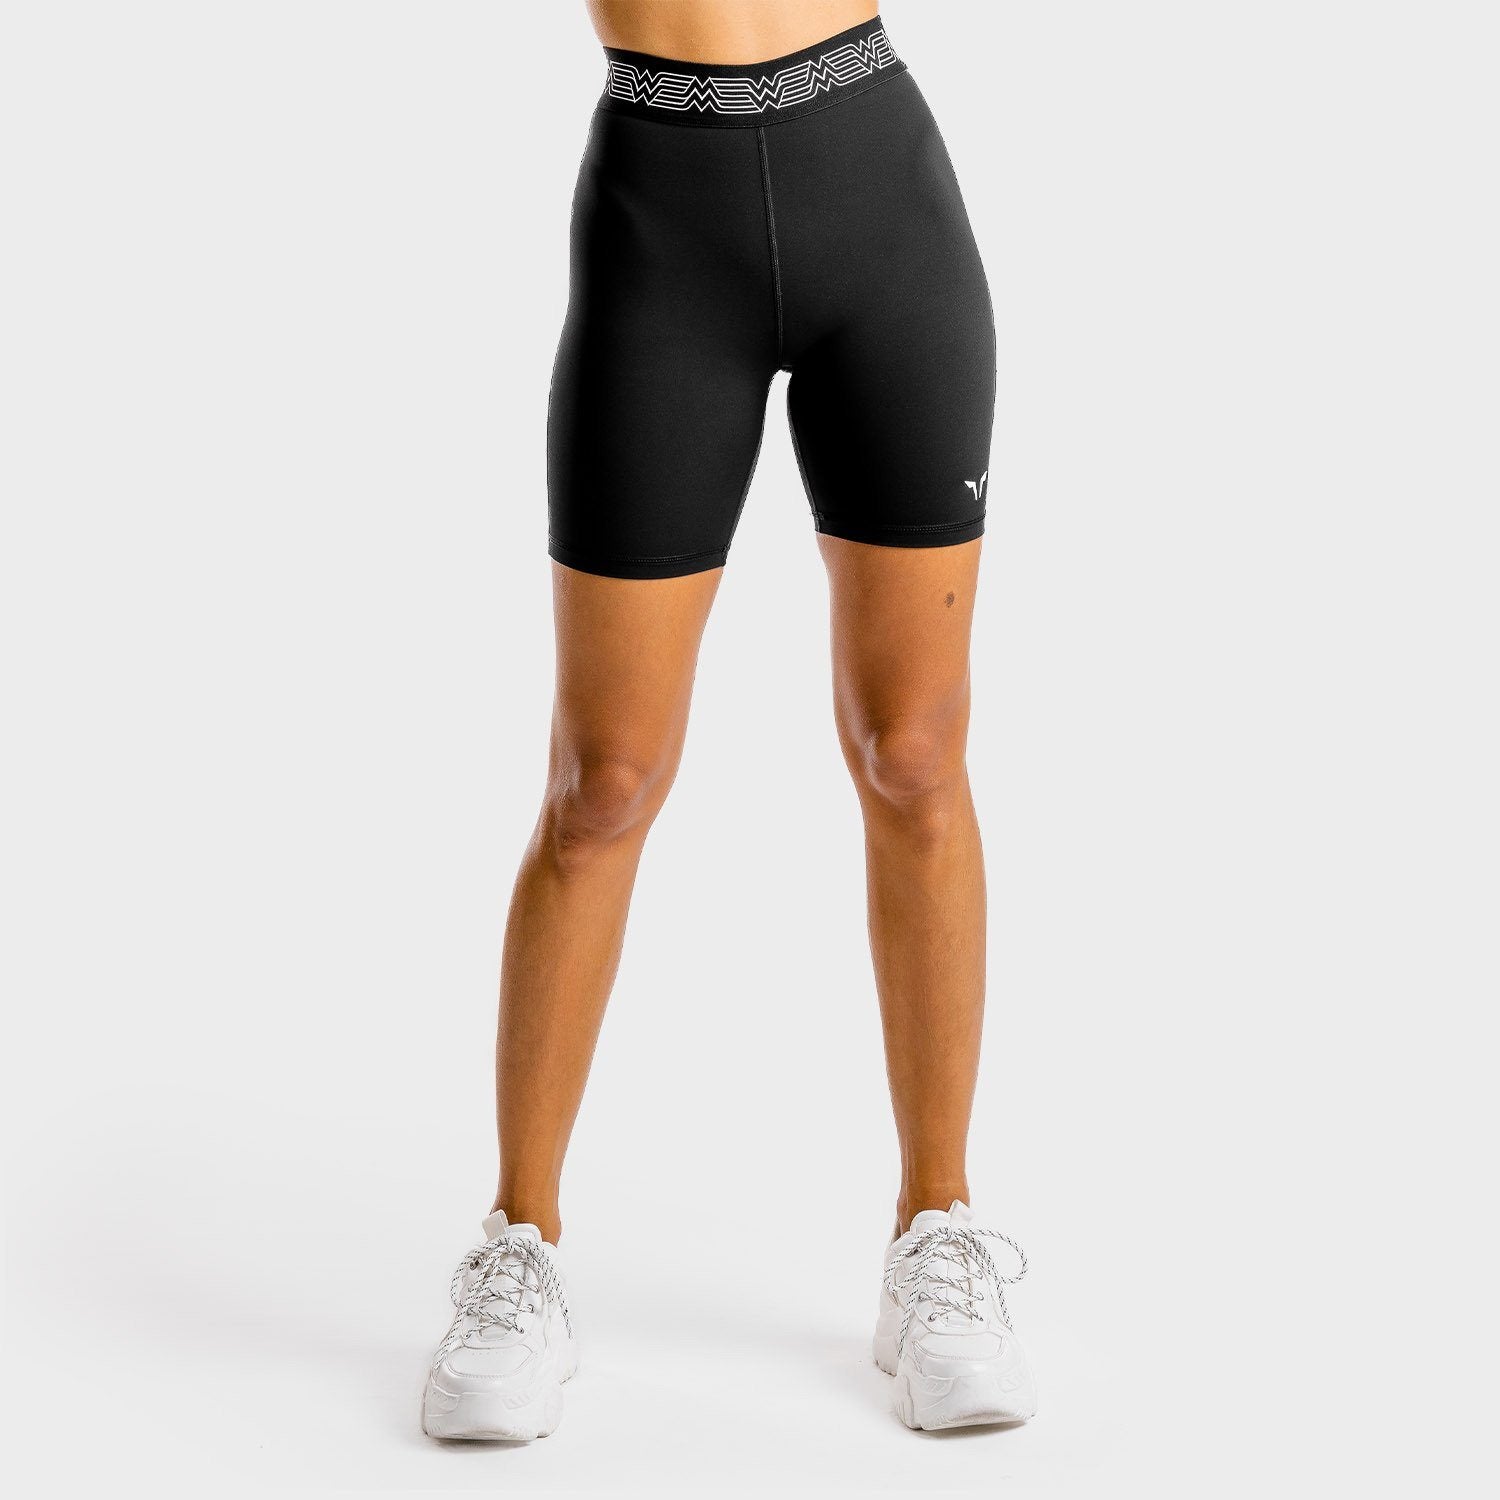 cycling booty shorts